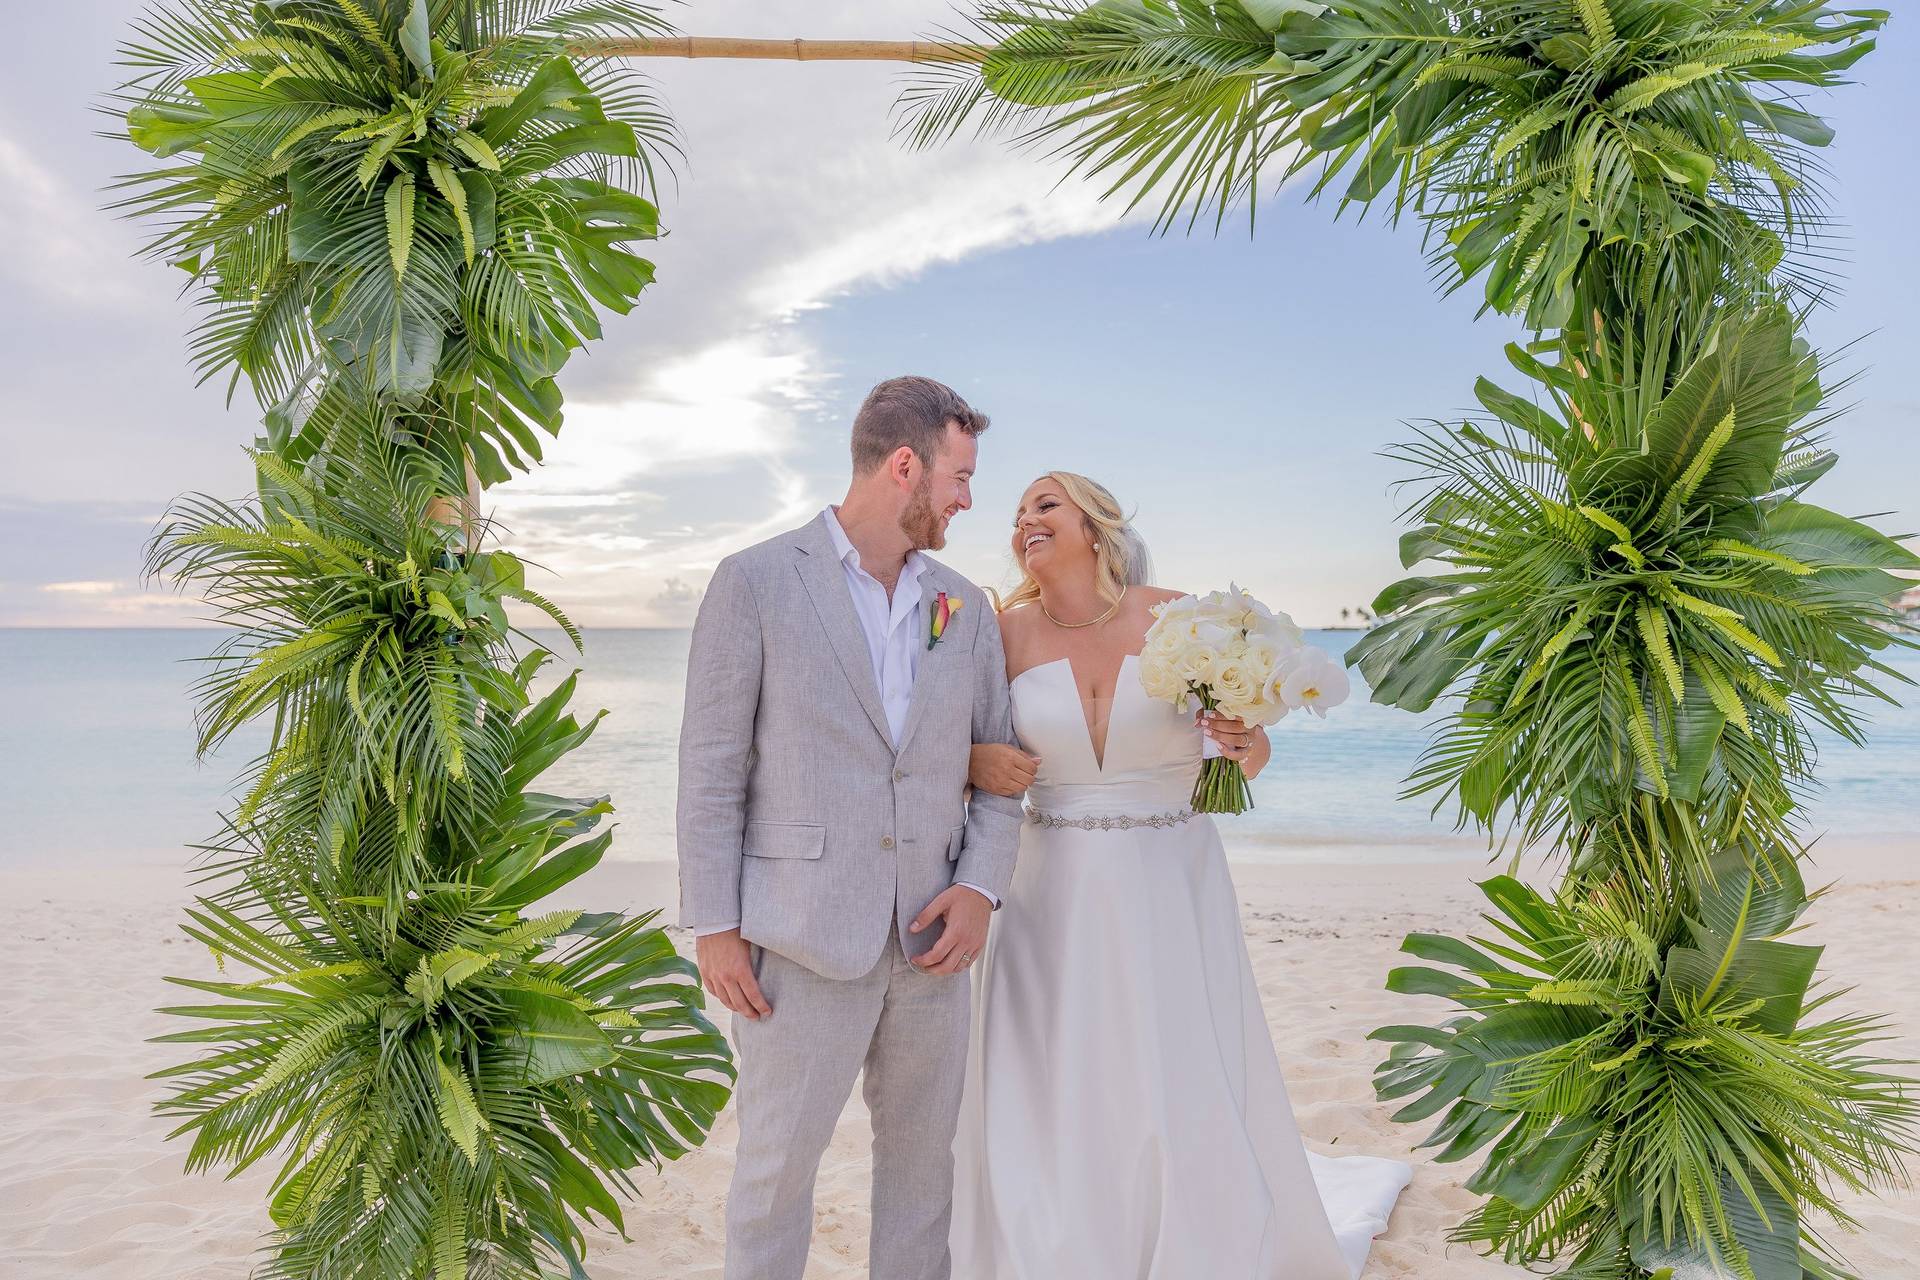 Weddings in the Bahamas - Planning - Nassau, BS - WeddingWire